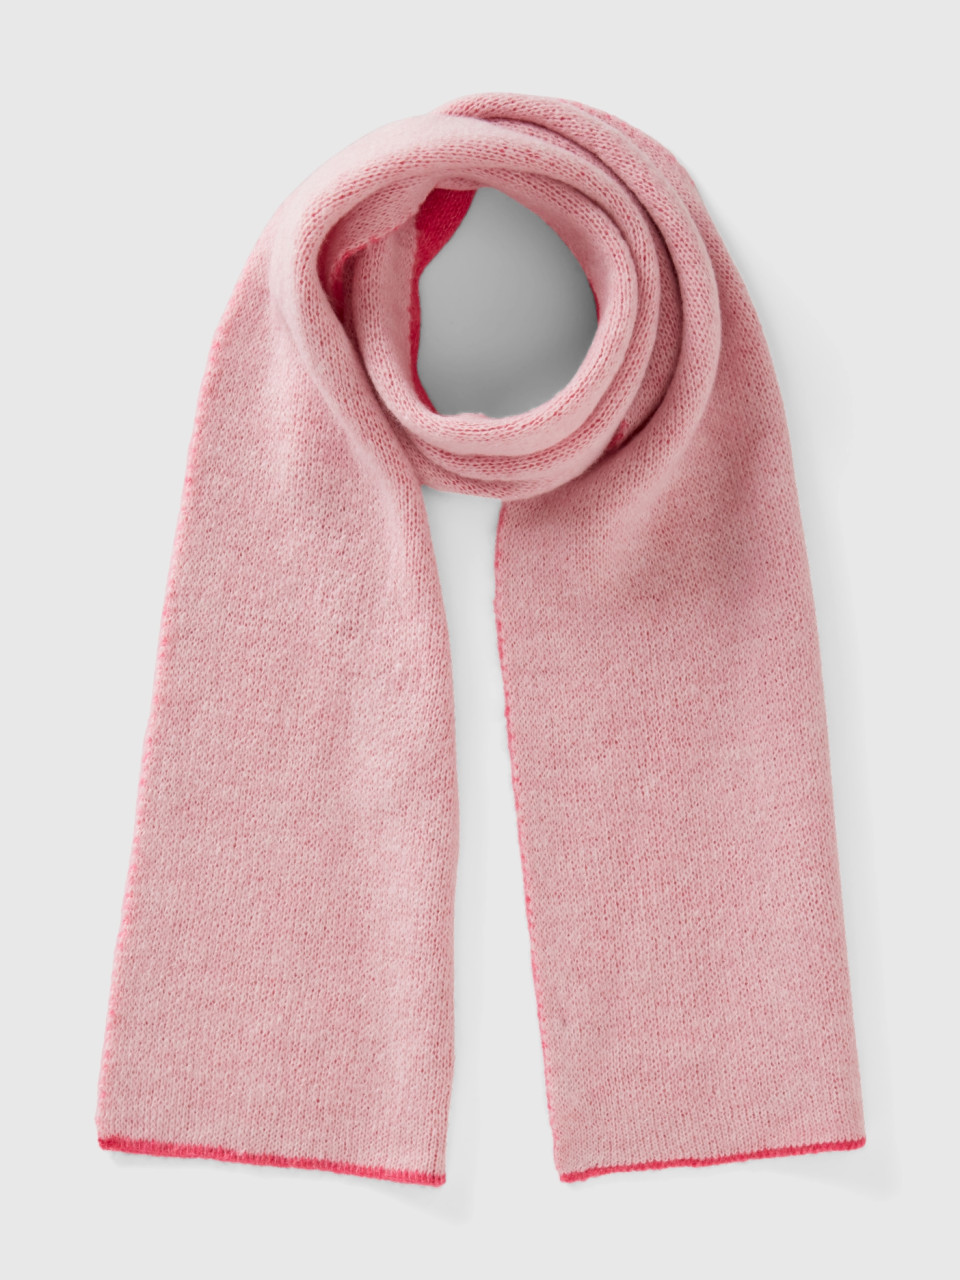 Benetton, Reversible Knit Scarf, Pink, Kids